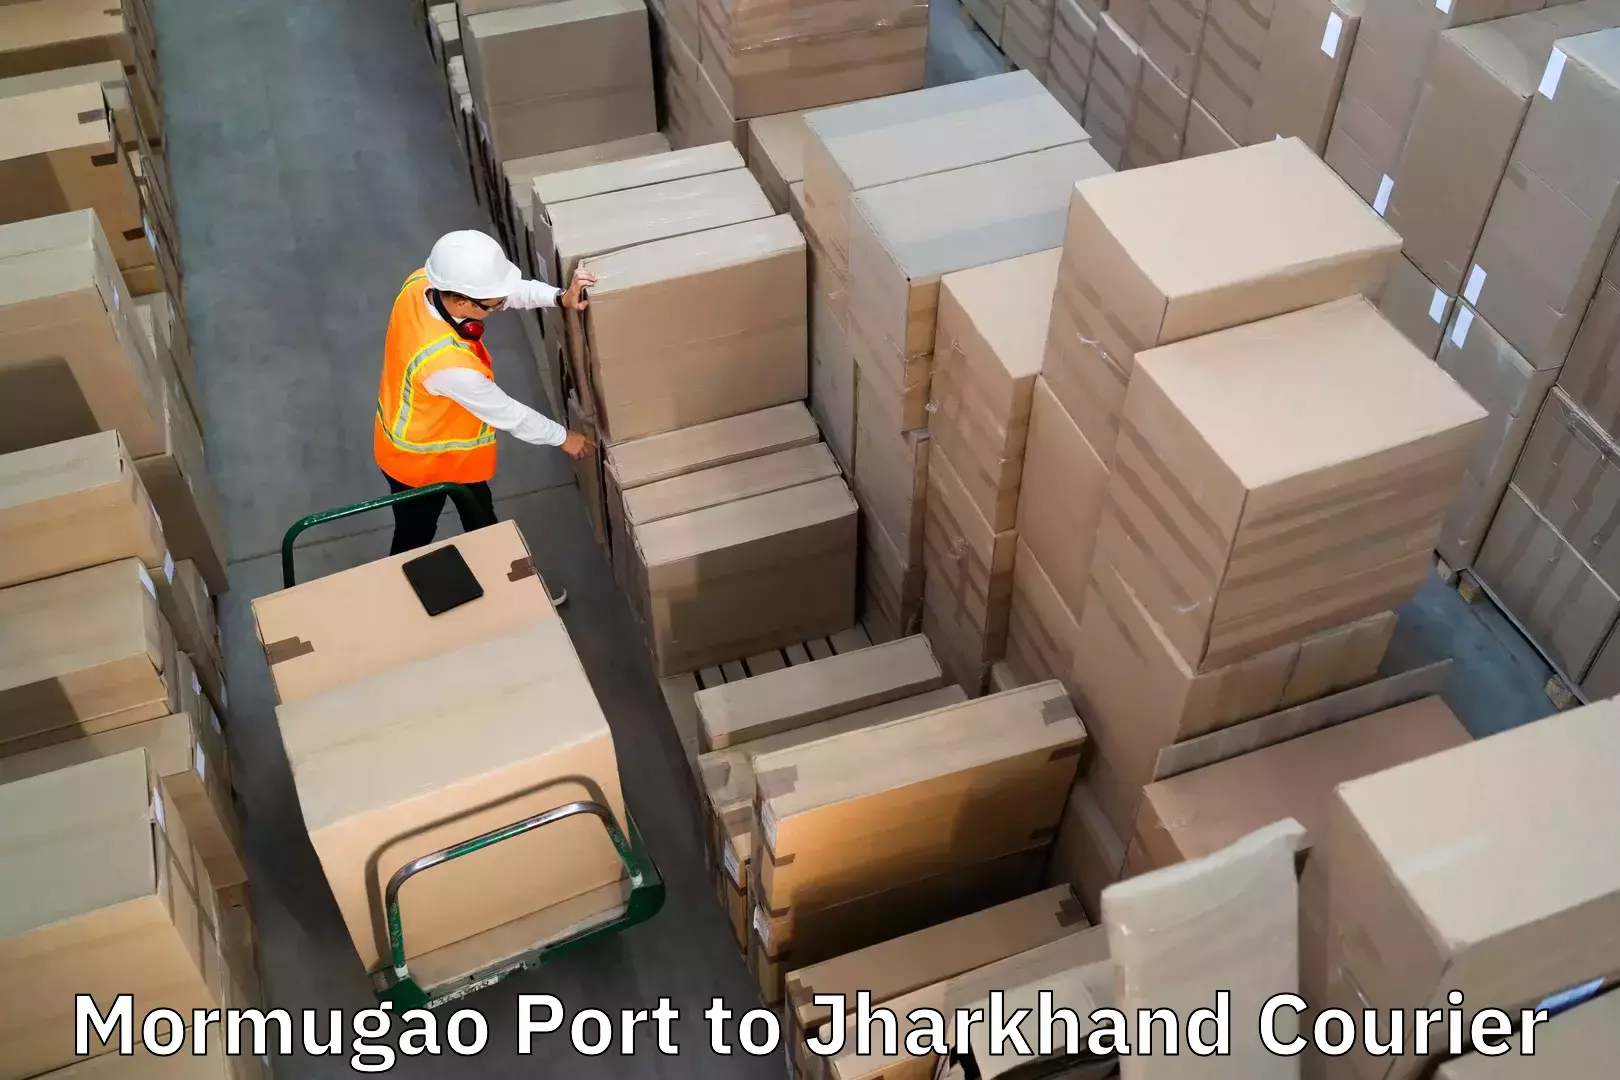 Express luggage delivery in Mormugao Port to Seraikela Kharsawan